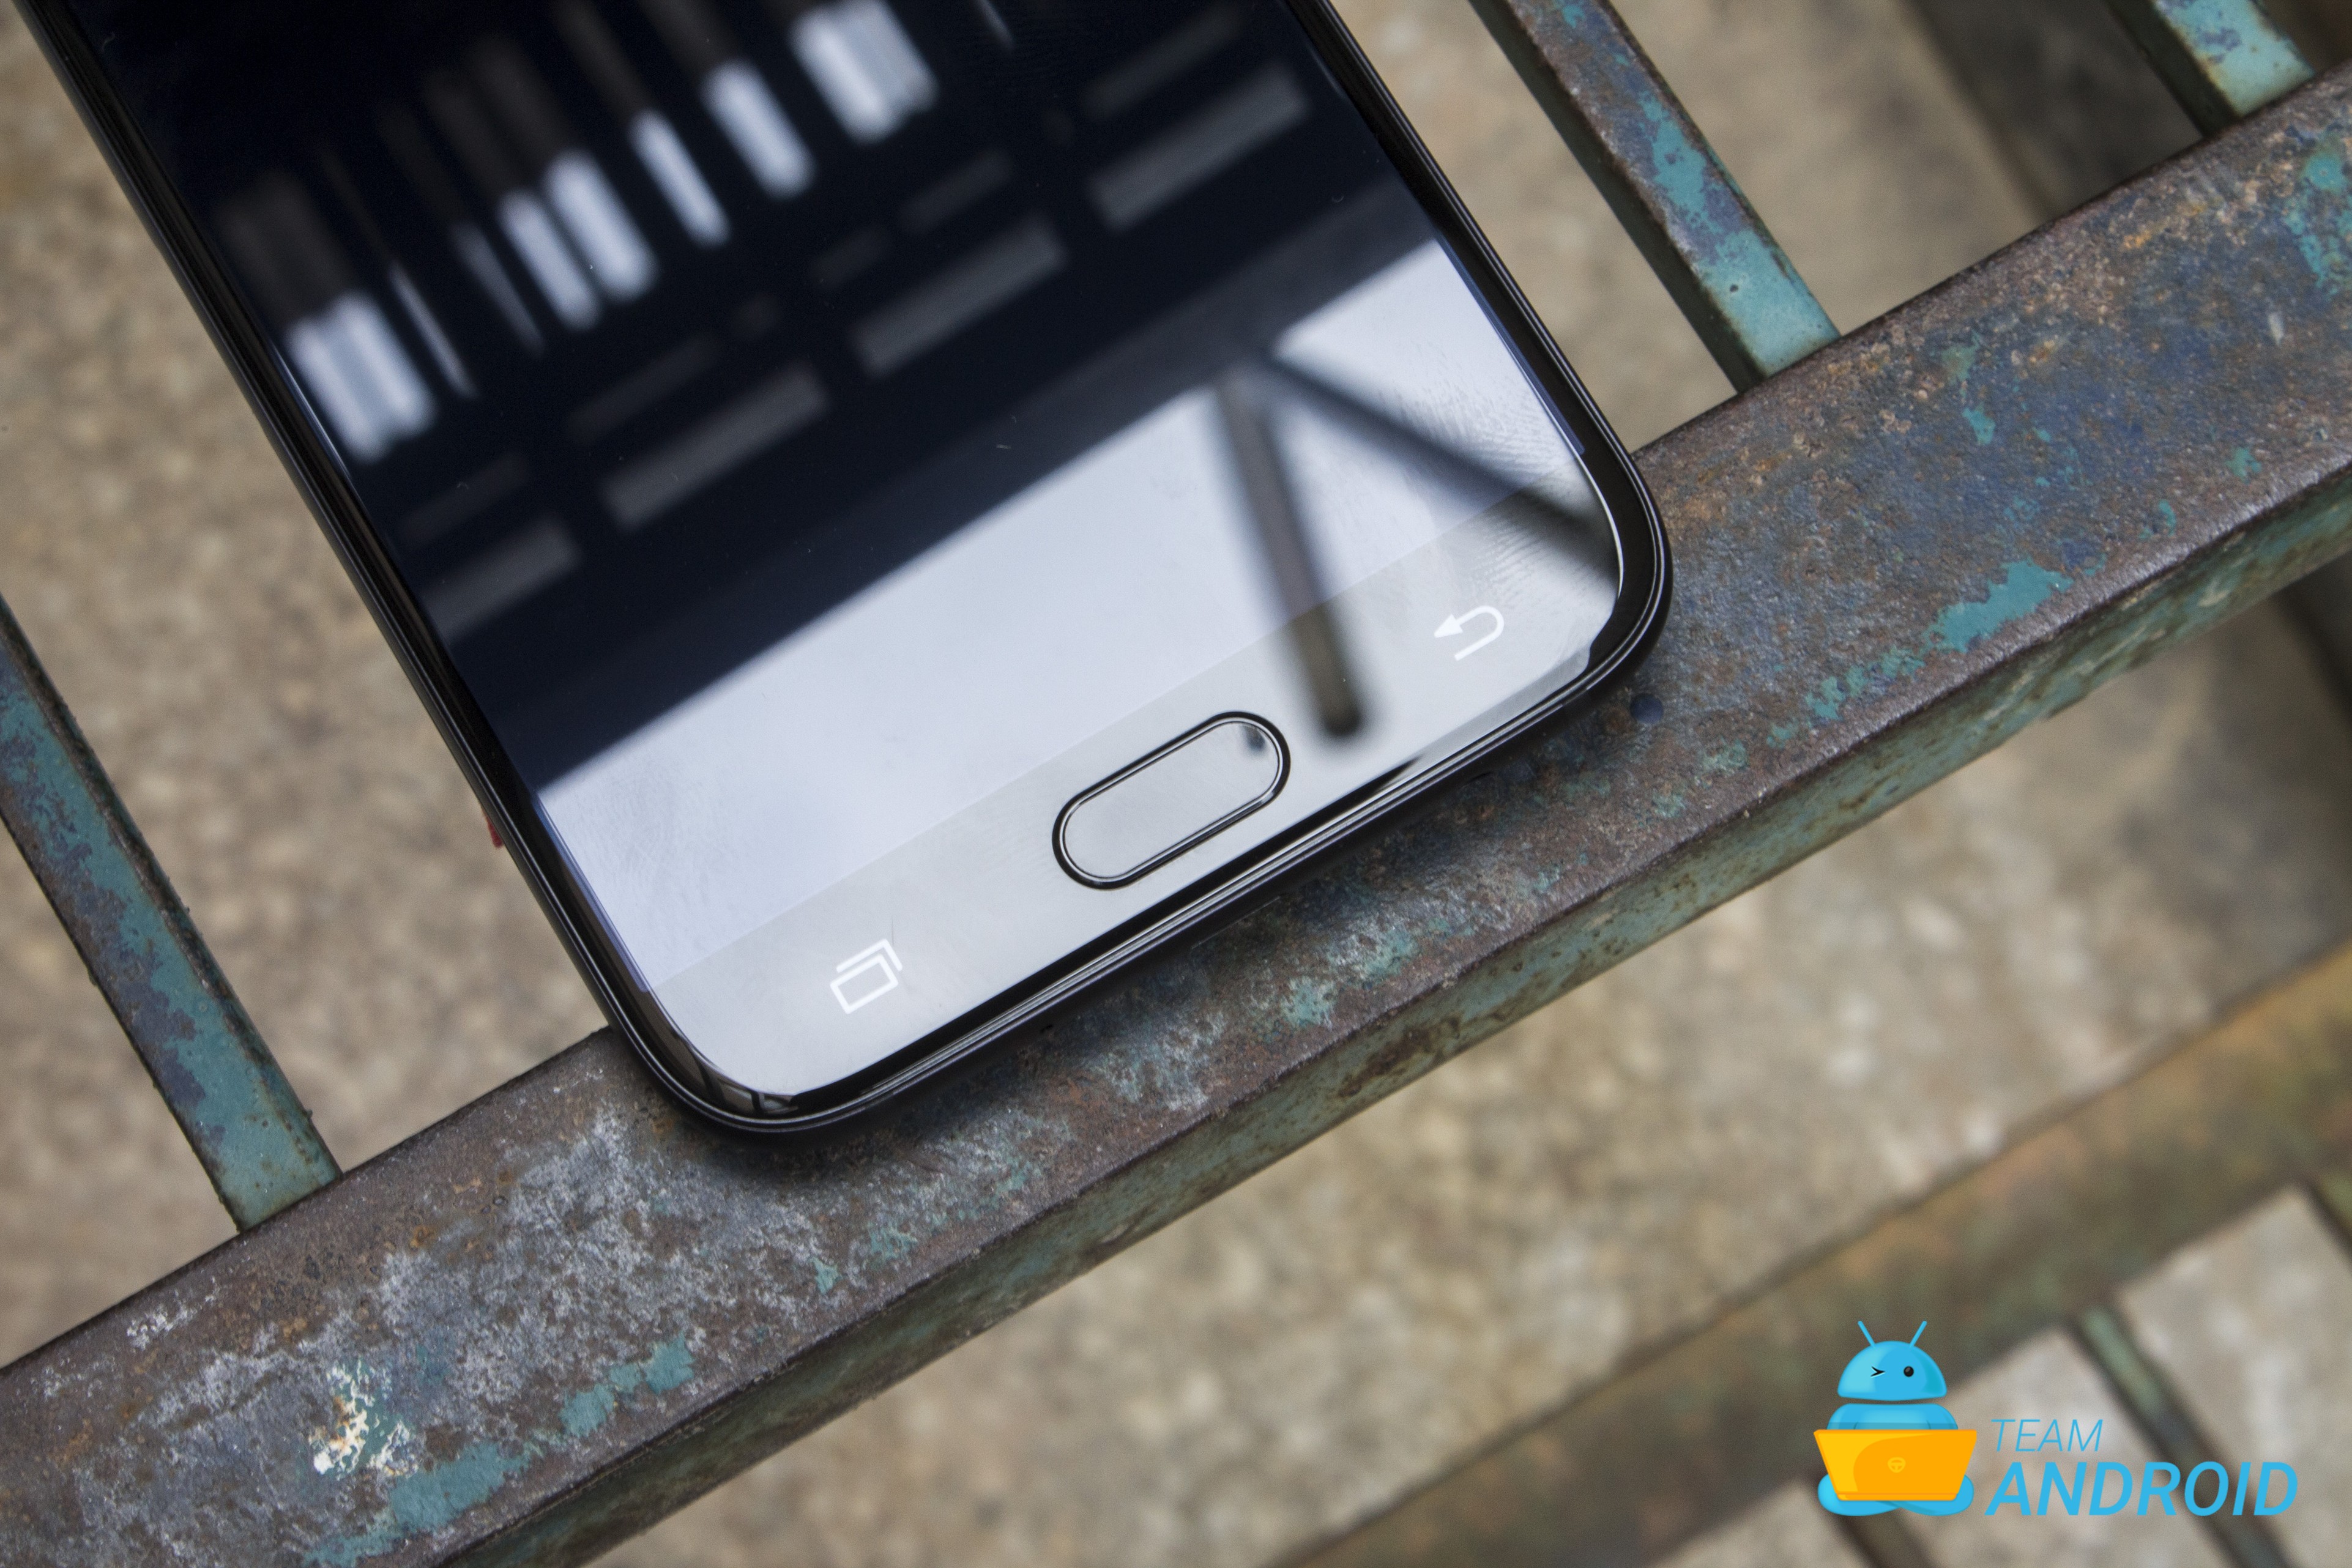 Samsung Galaxy J7 Pro Review 4